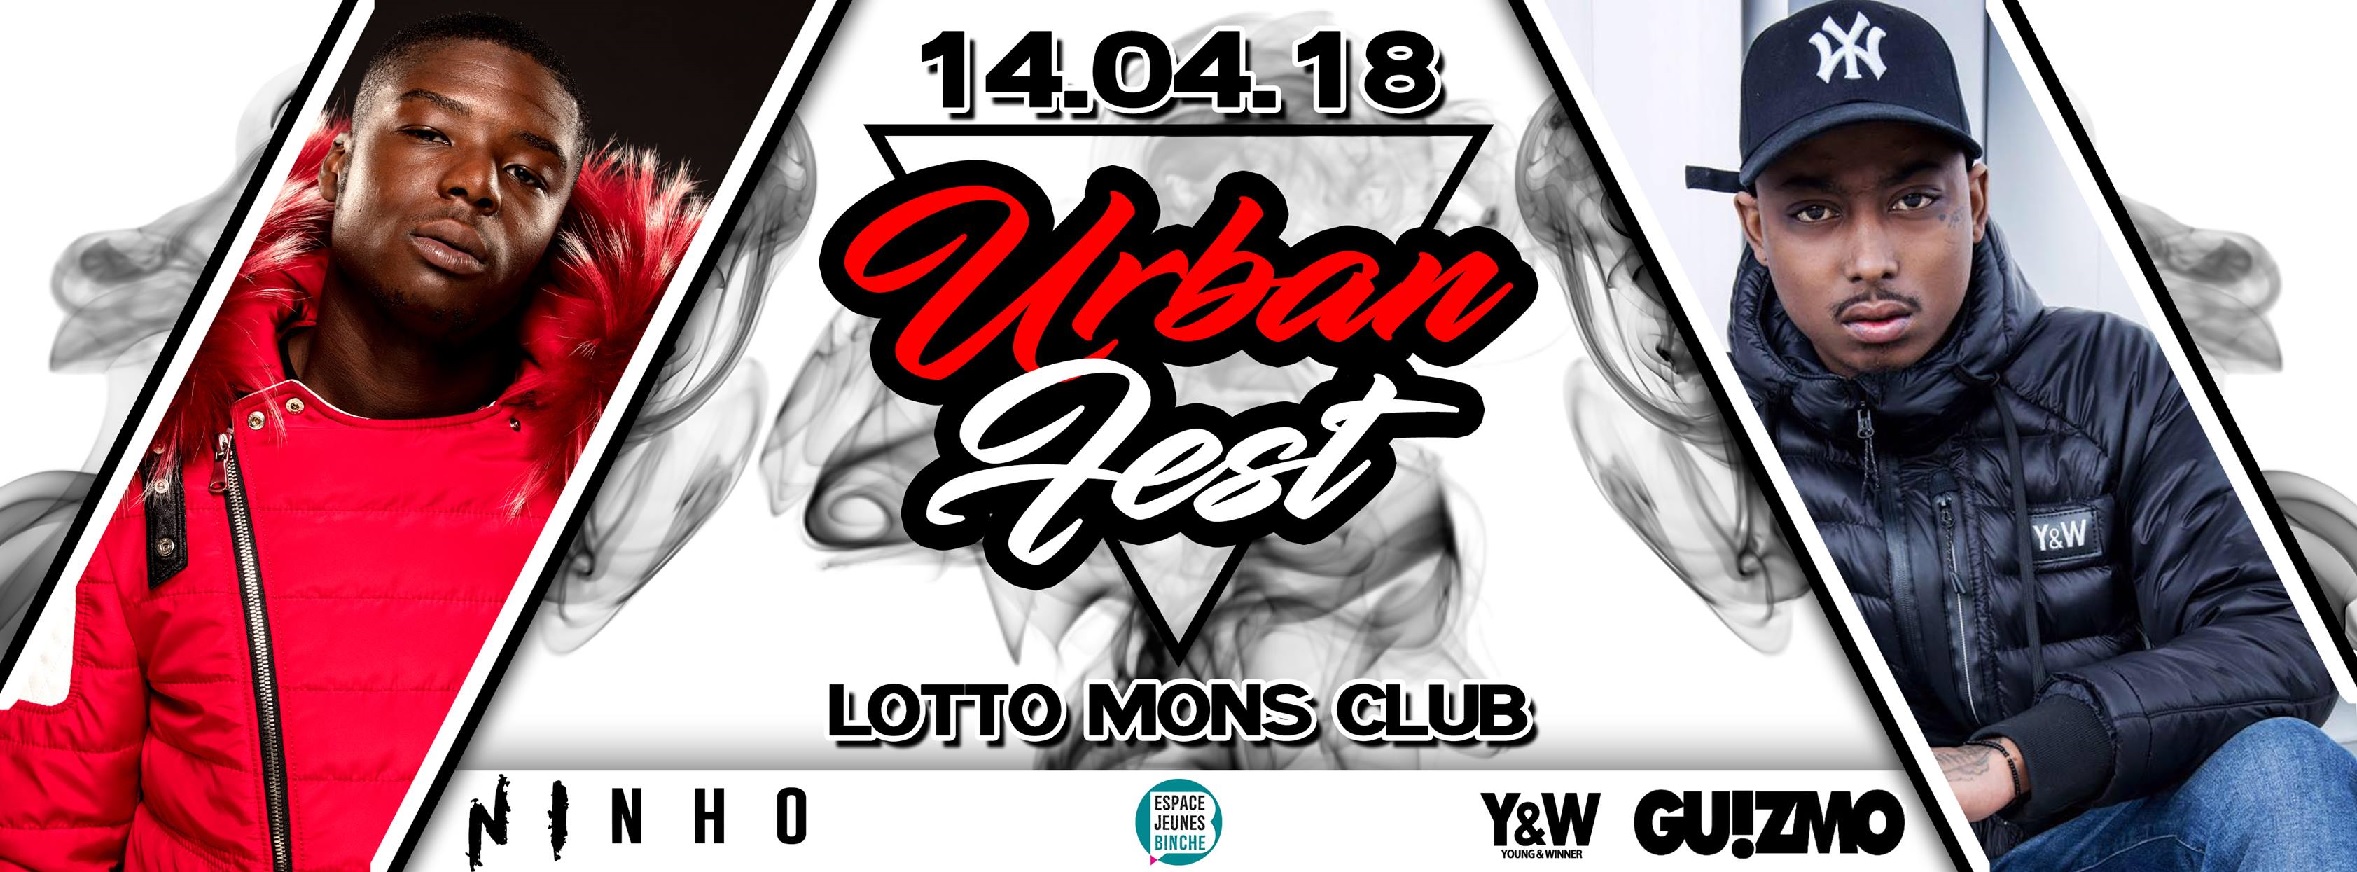 Urban Fest' 2018 - Festival Hip Hop